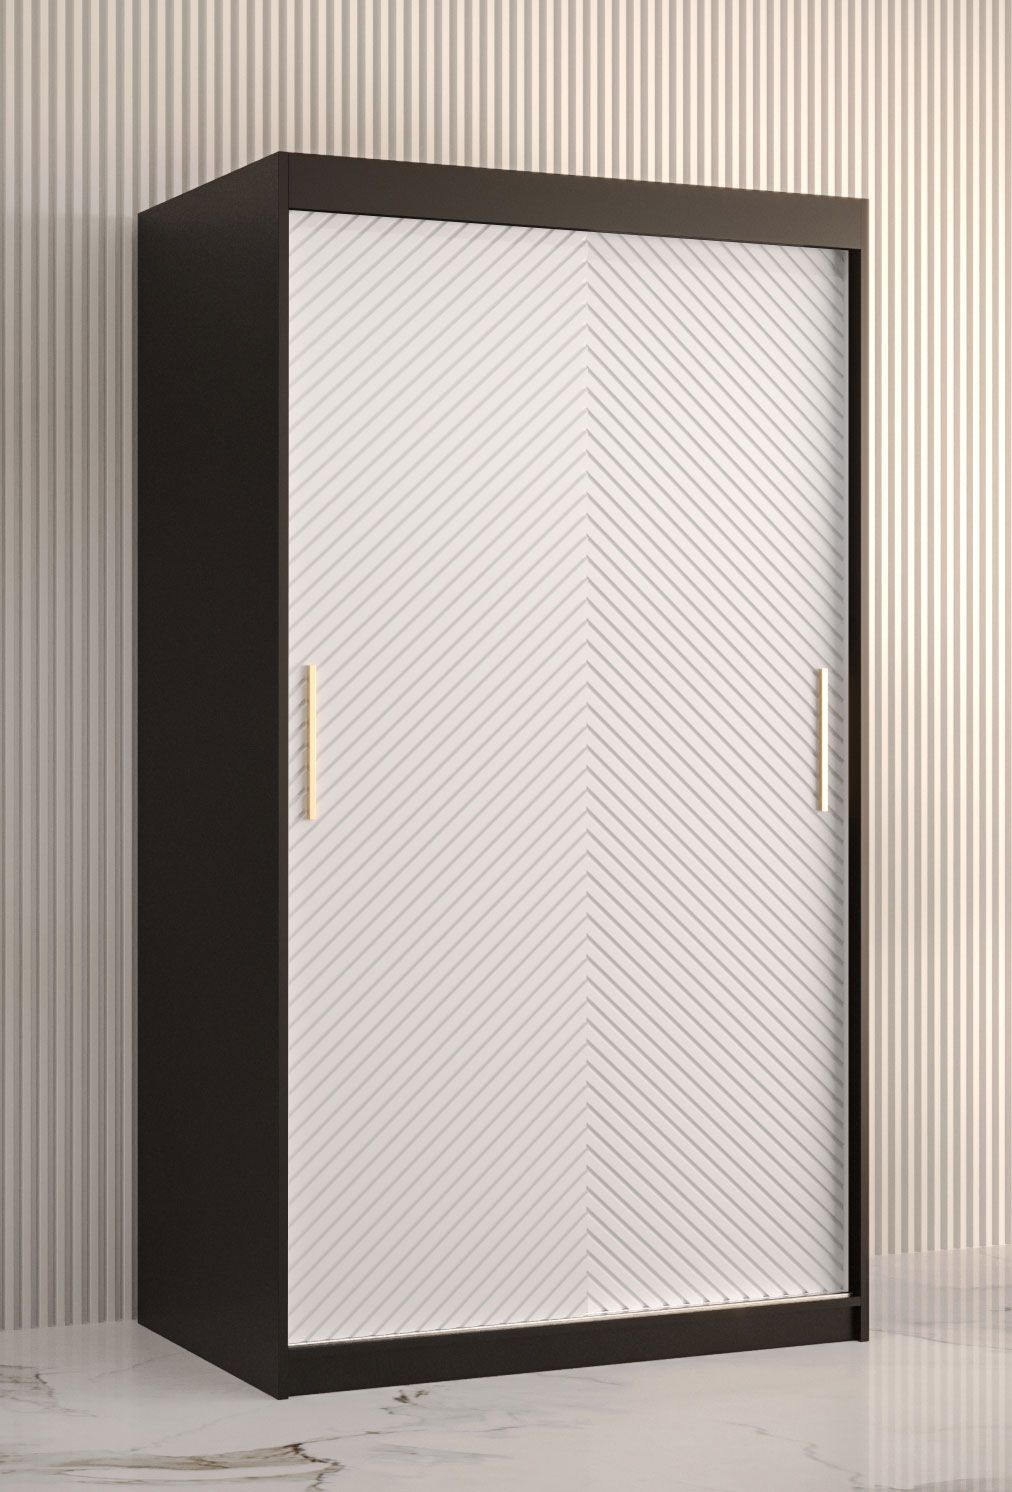 moderne kledingkast met strak design Balmenhorn 03, kleur: mat zwart / mat wit - afmetingen: 200 x 100 x 62 cm (H x B x D), met vijf vakken en twee kledingroedes